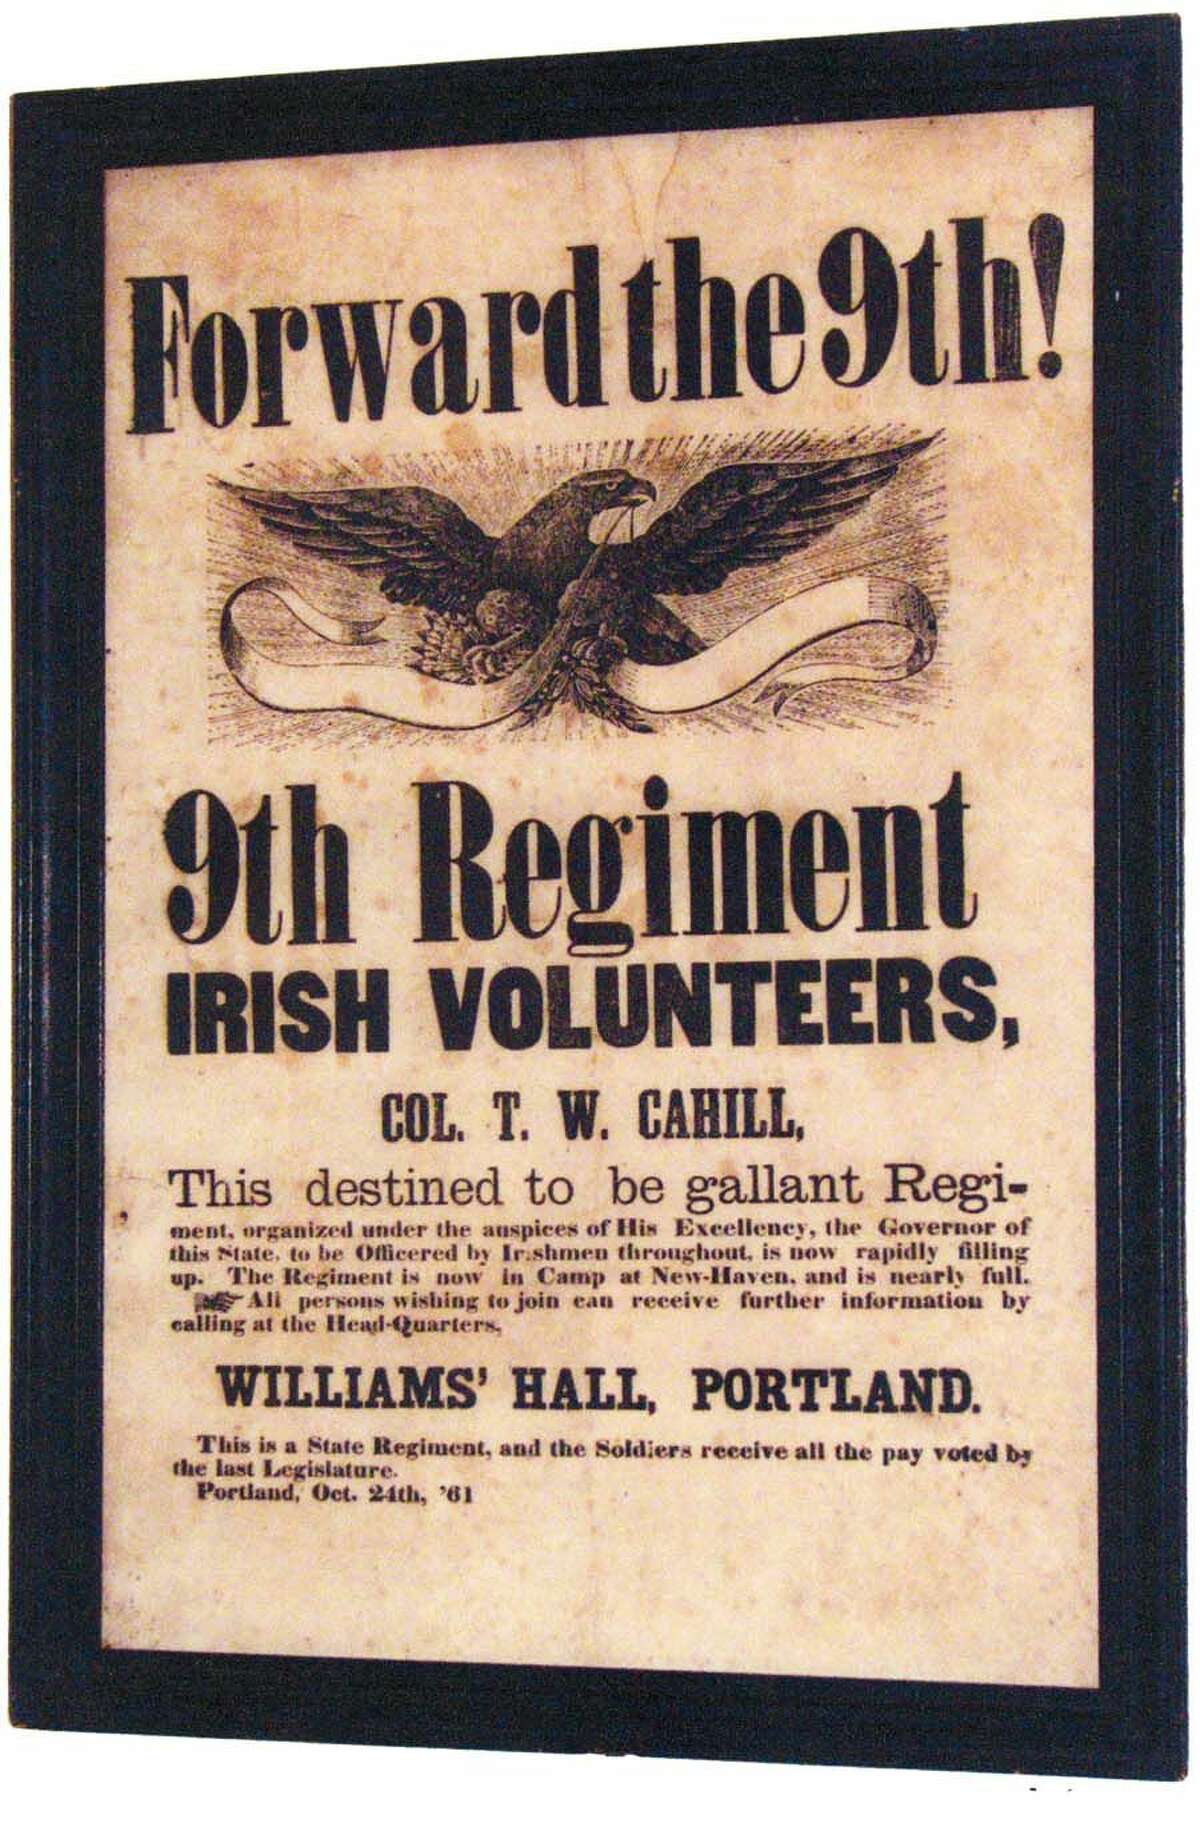 A recruitment poster for Connecticut's Ninth Regiment.